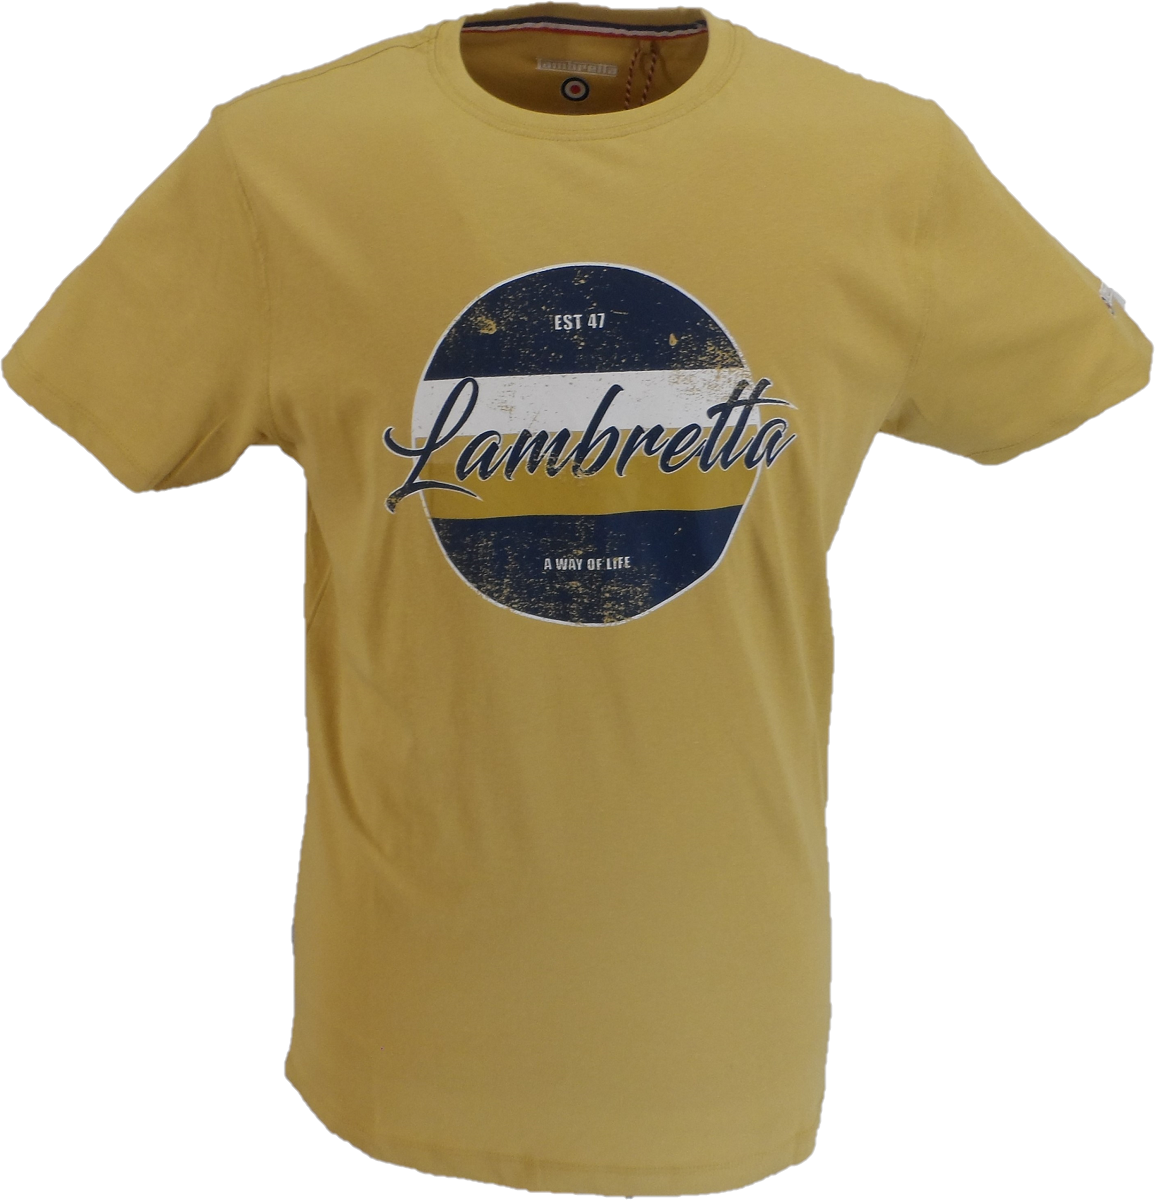 Lambretta Sand Brown Retro Vintage Print T-Shirt